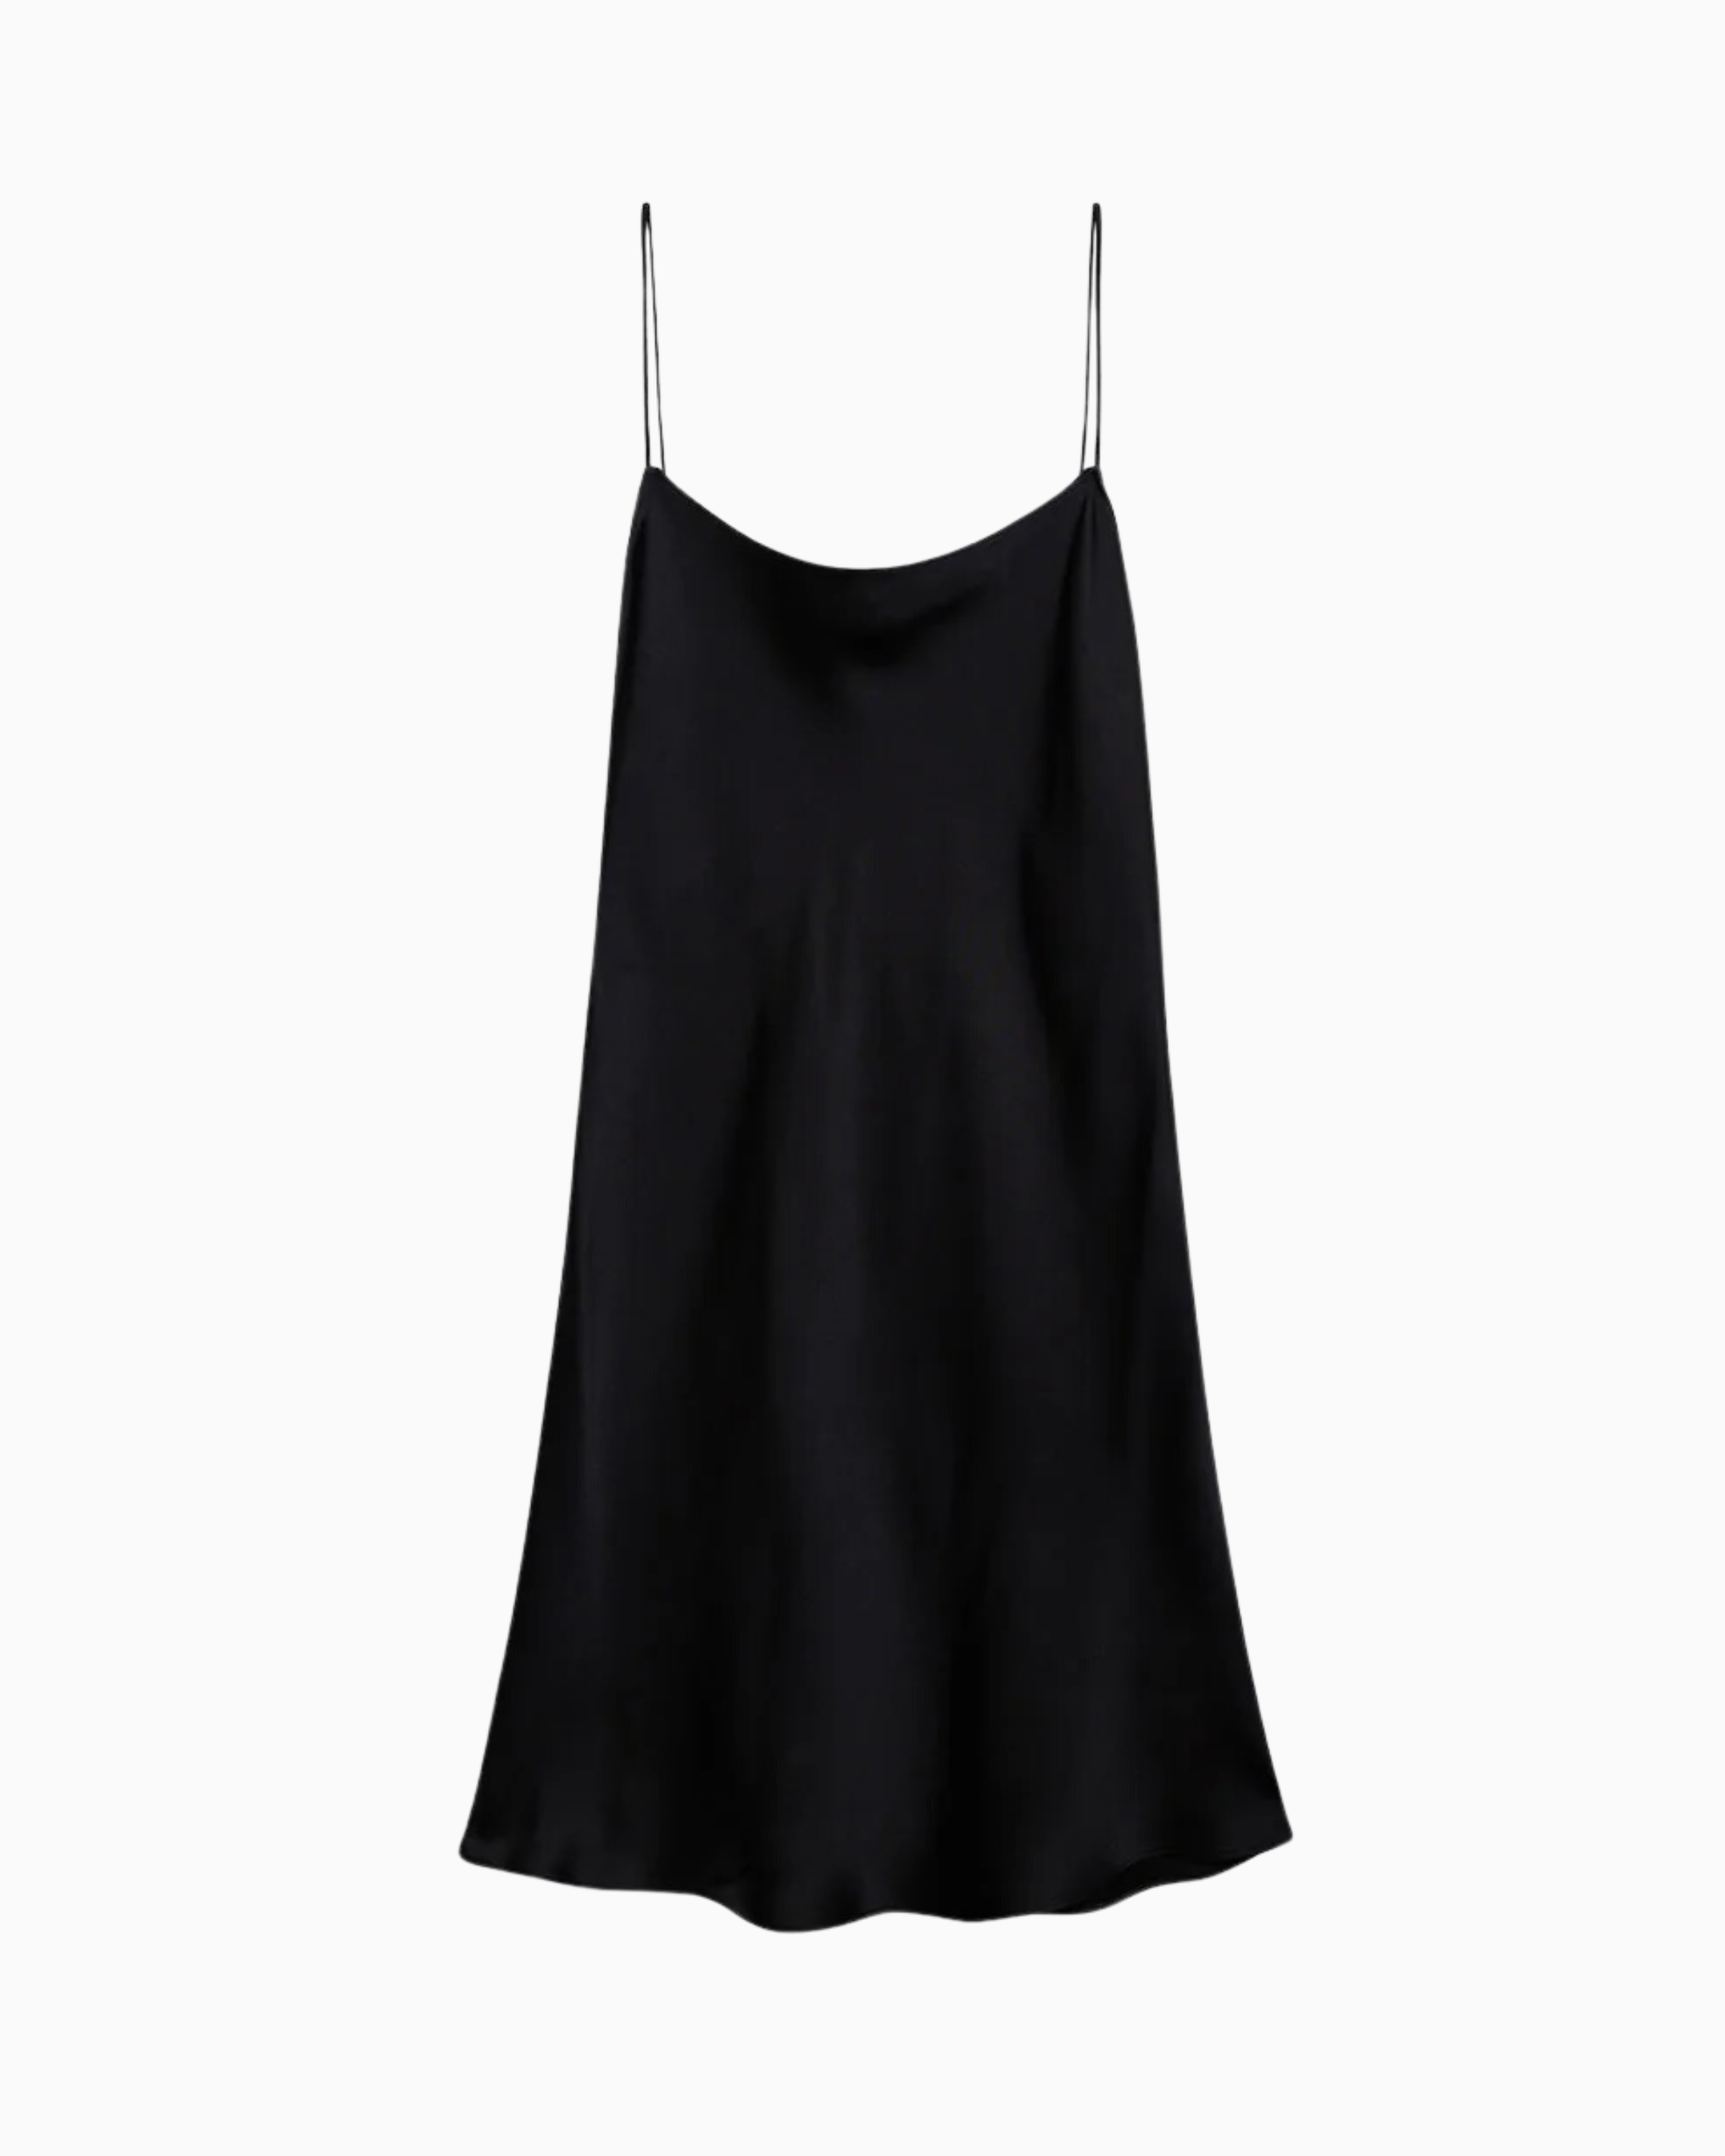 Anine Bing Chloe Mini Dress in Black